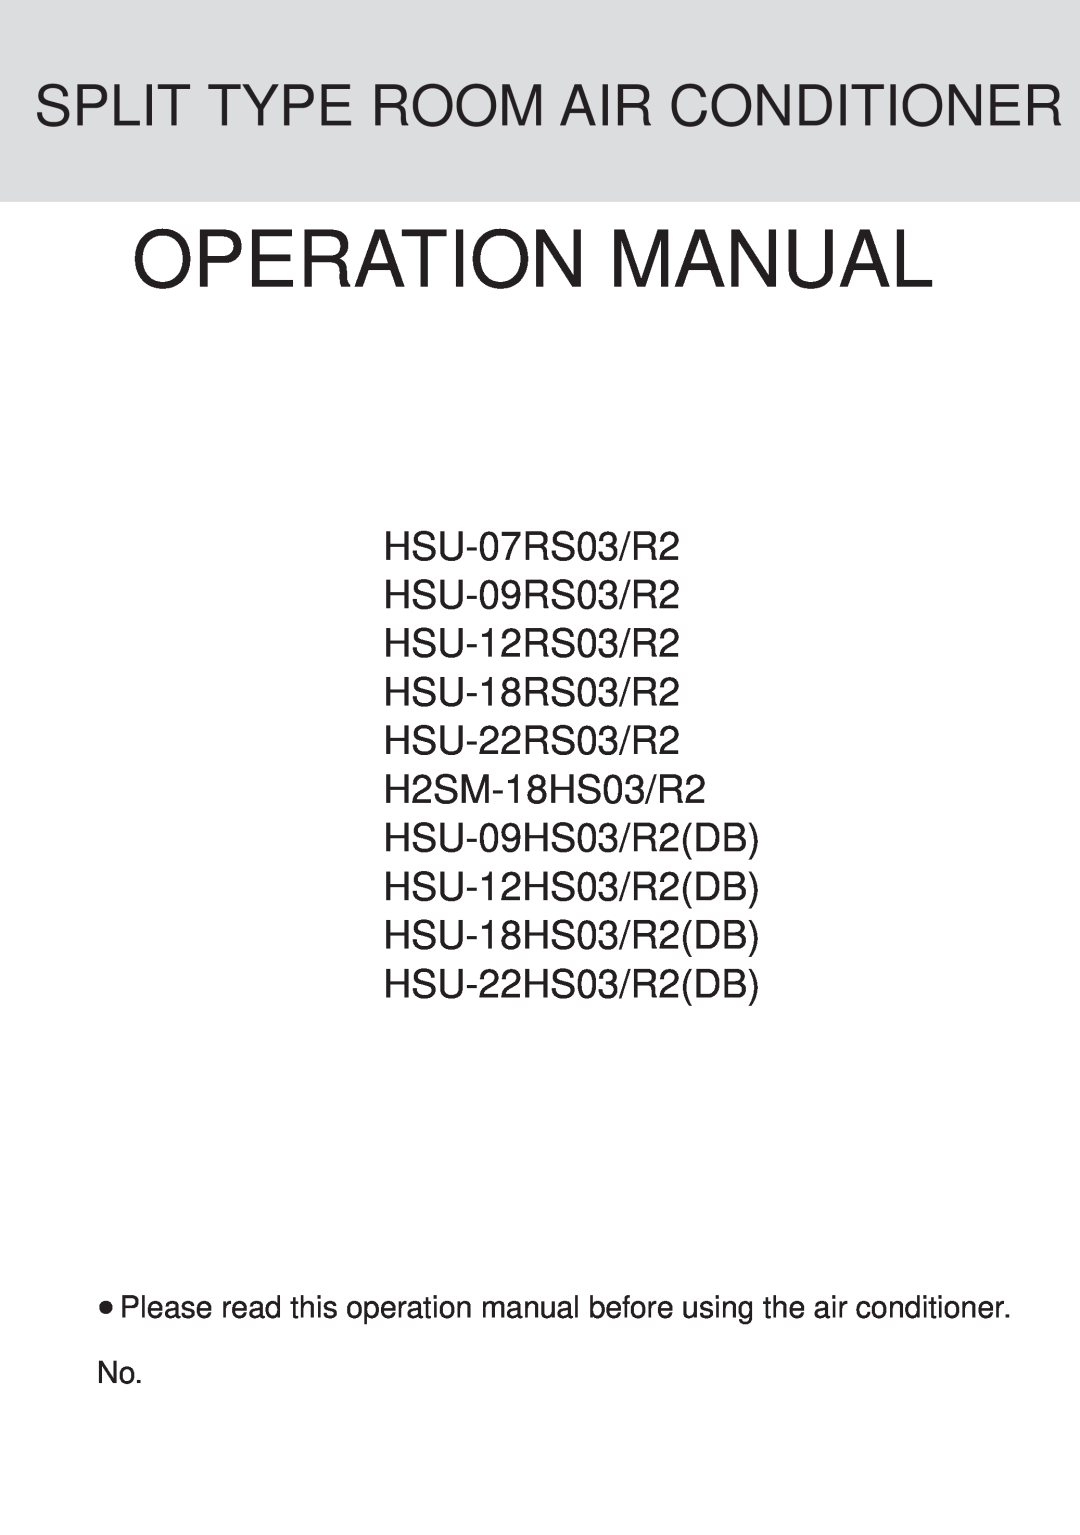 Haier HSU-09HS03/R2(DB) operation manual HSU-07RS03/R2 HSU-09RS03/R2 HSU-12RS03/R2, HSU-22HS03/R2DB 